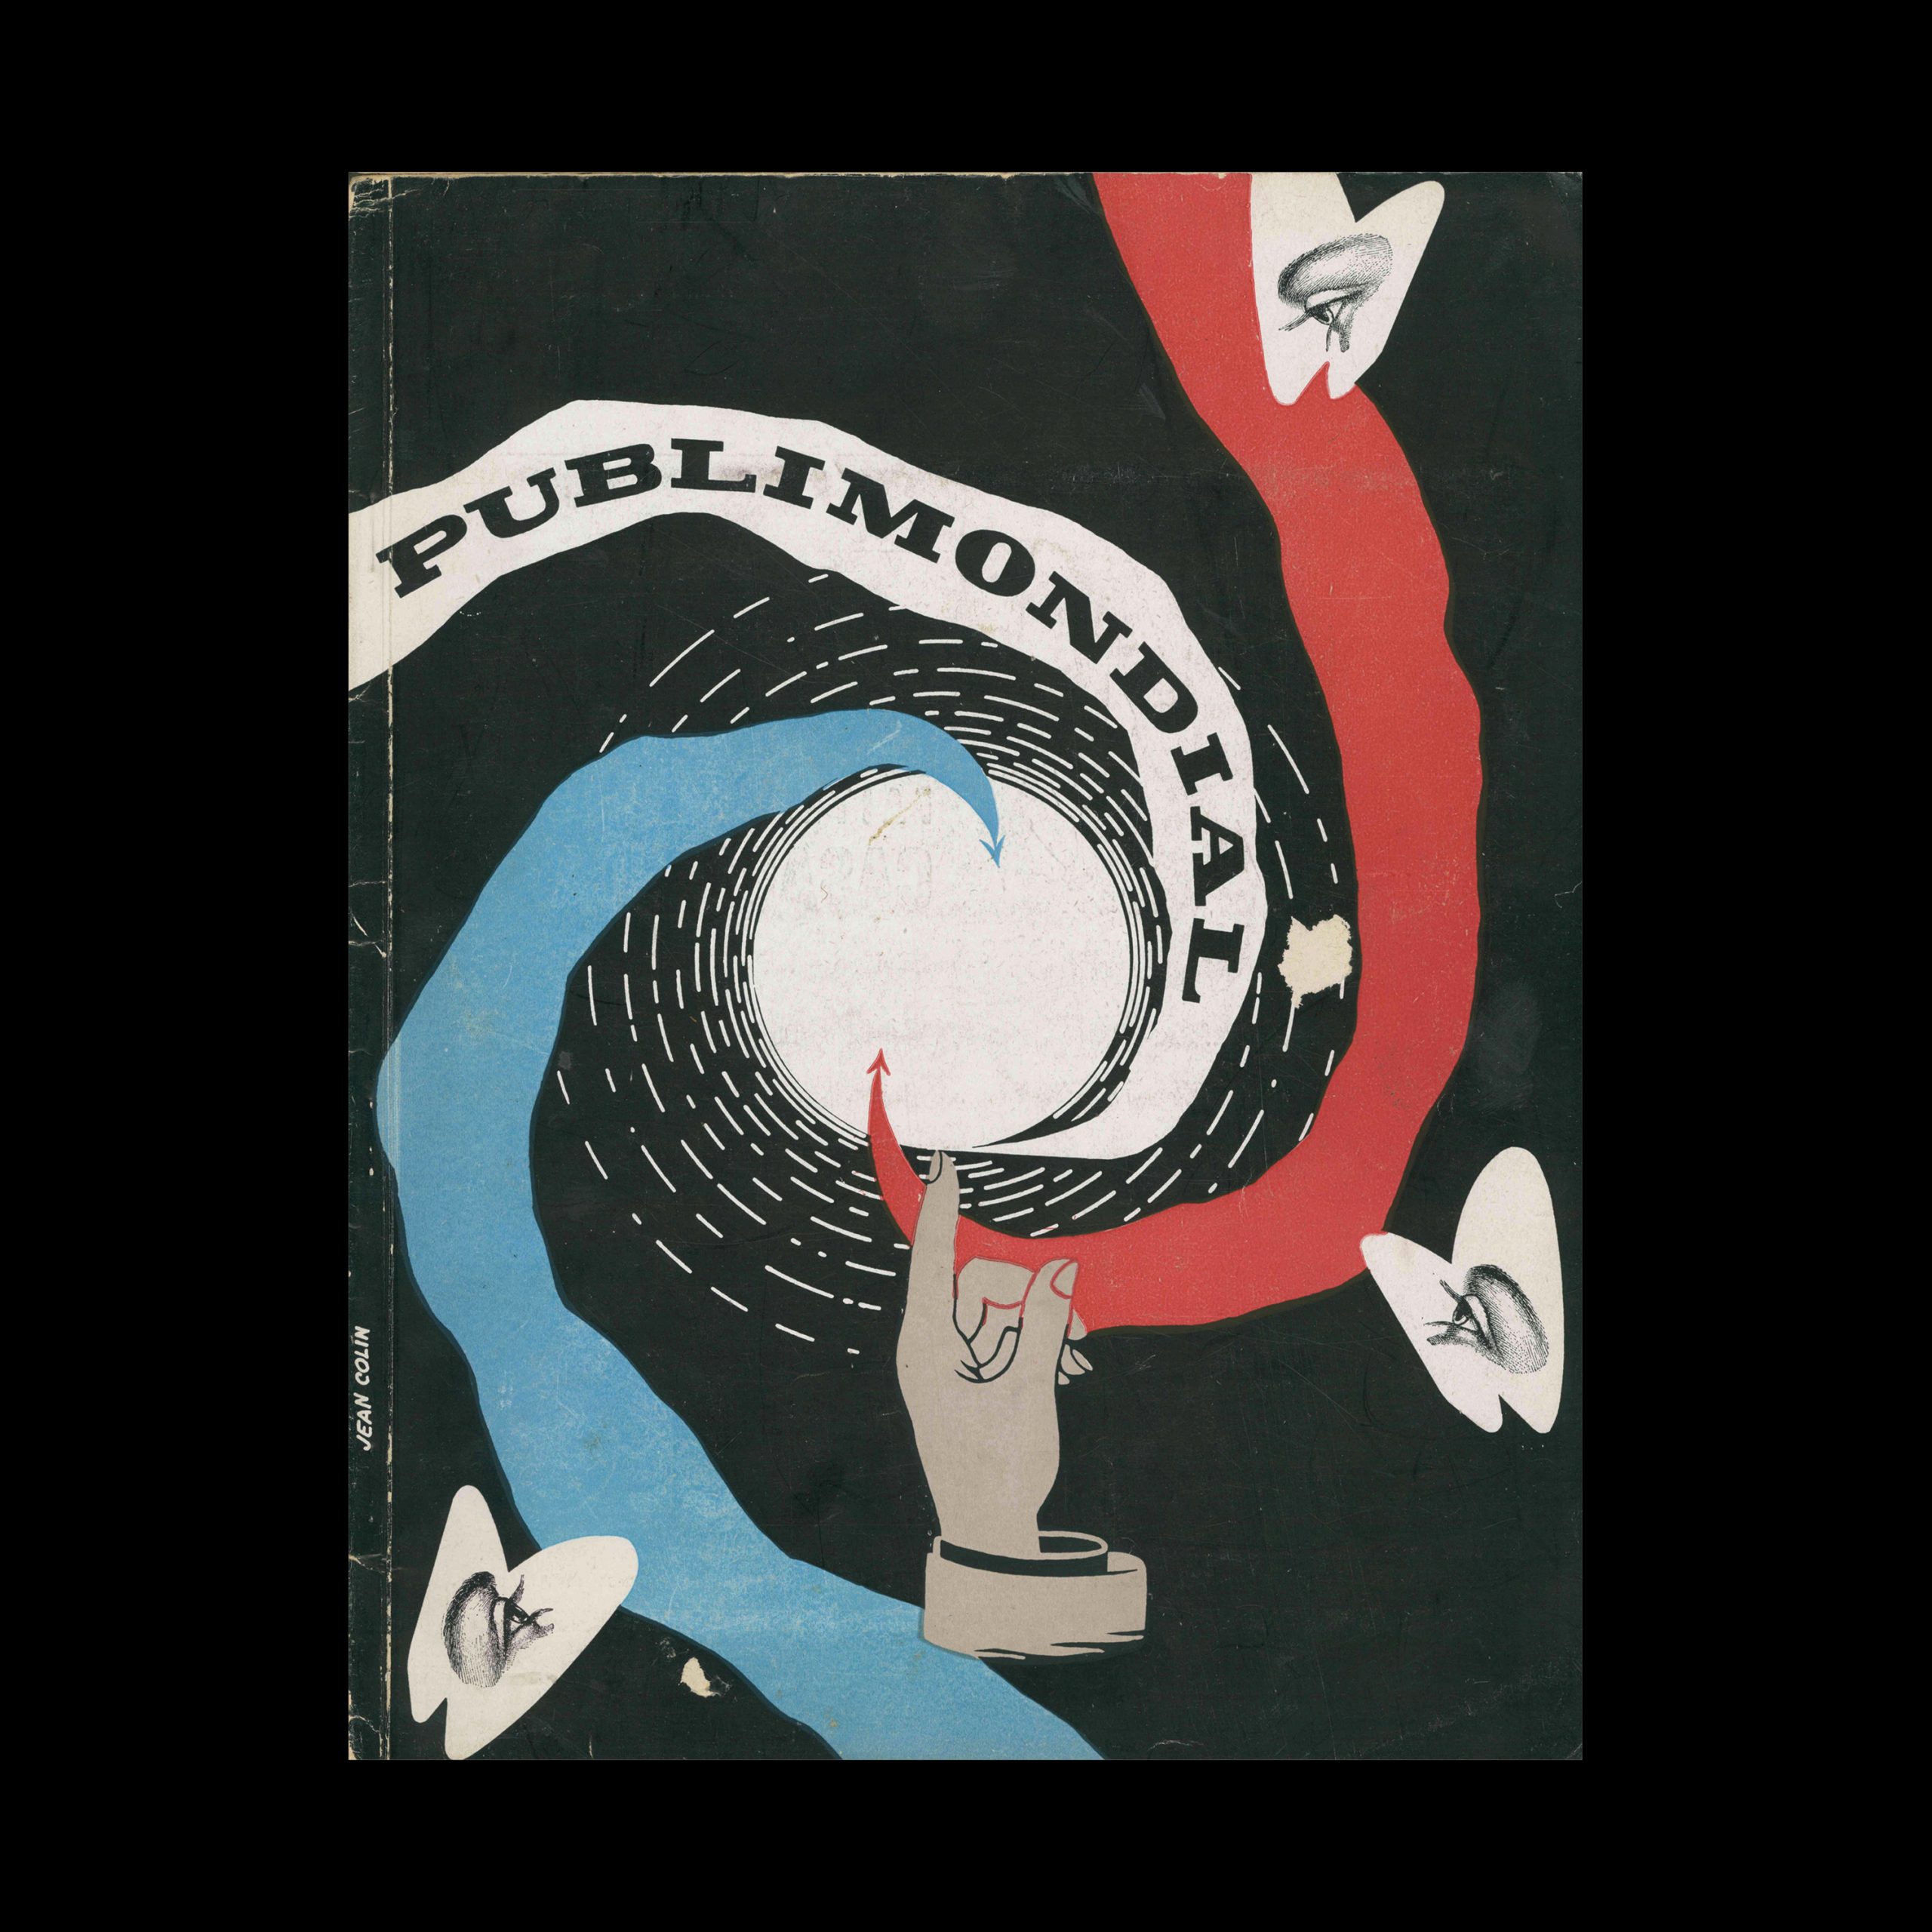 Publimondial 25, 1950. Cover design by Jean Colin